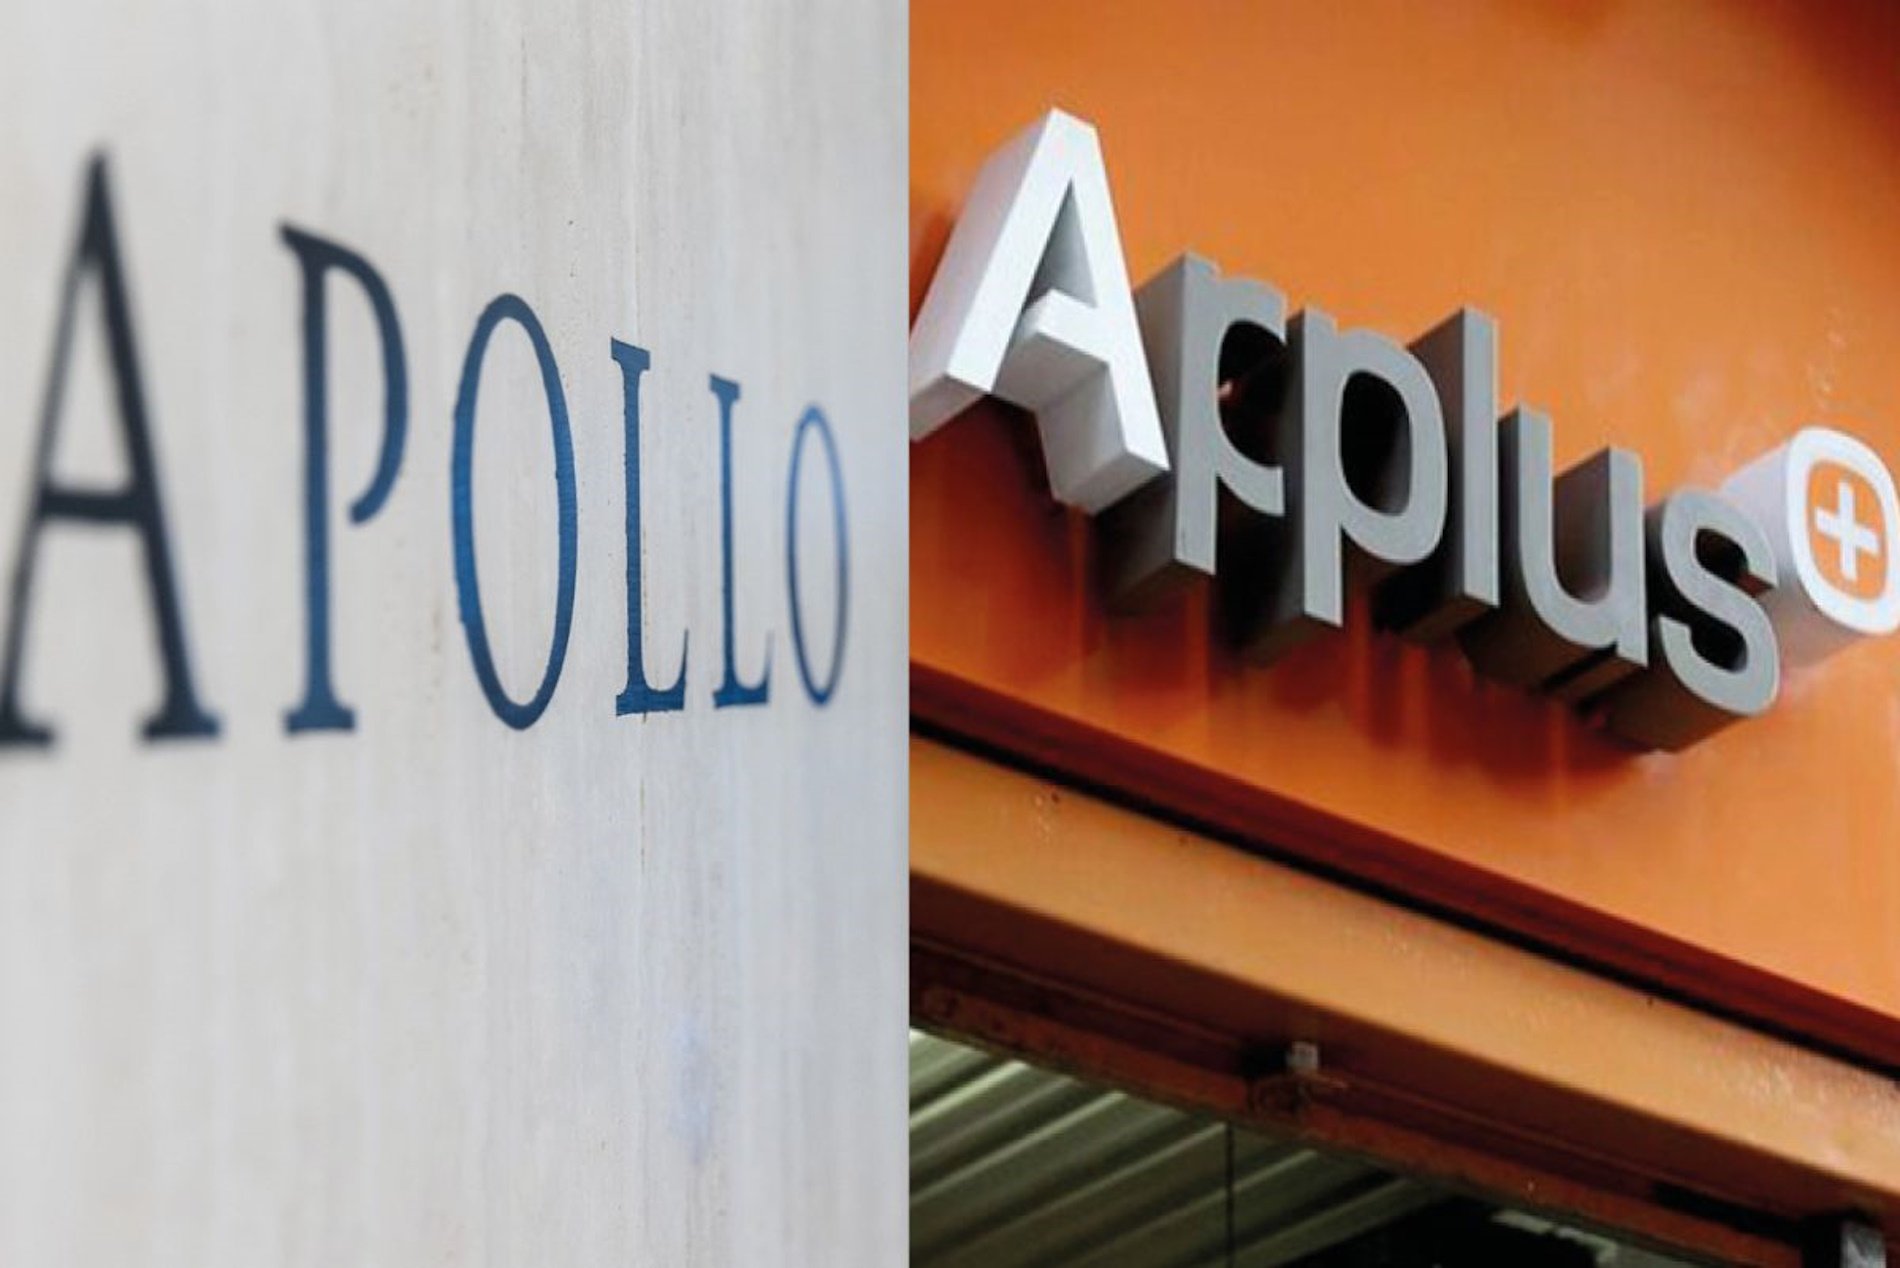 Apollo Applus / Servimedia